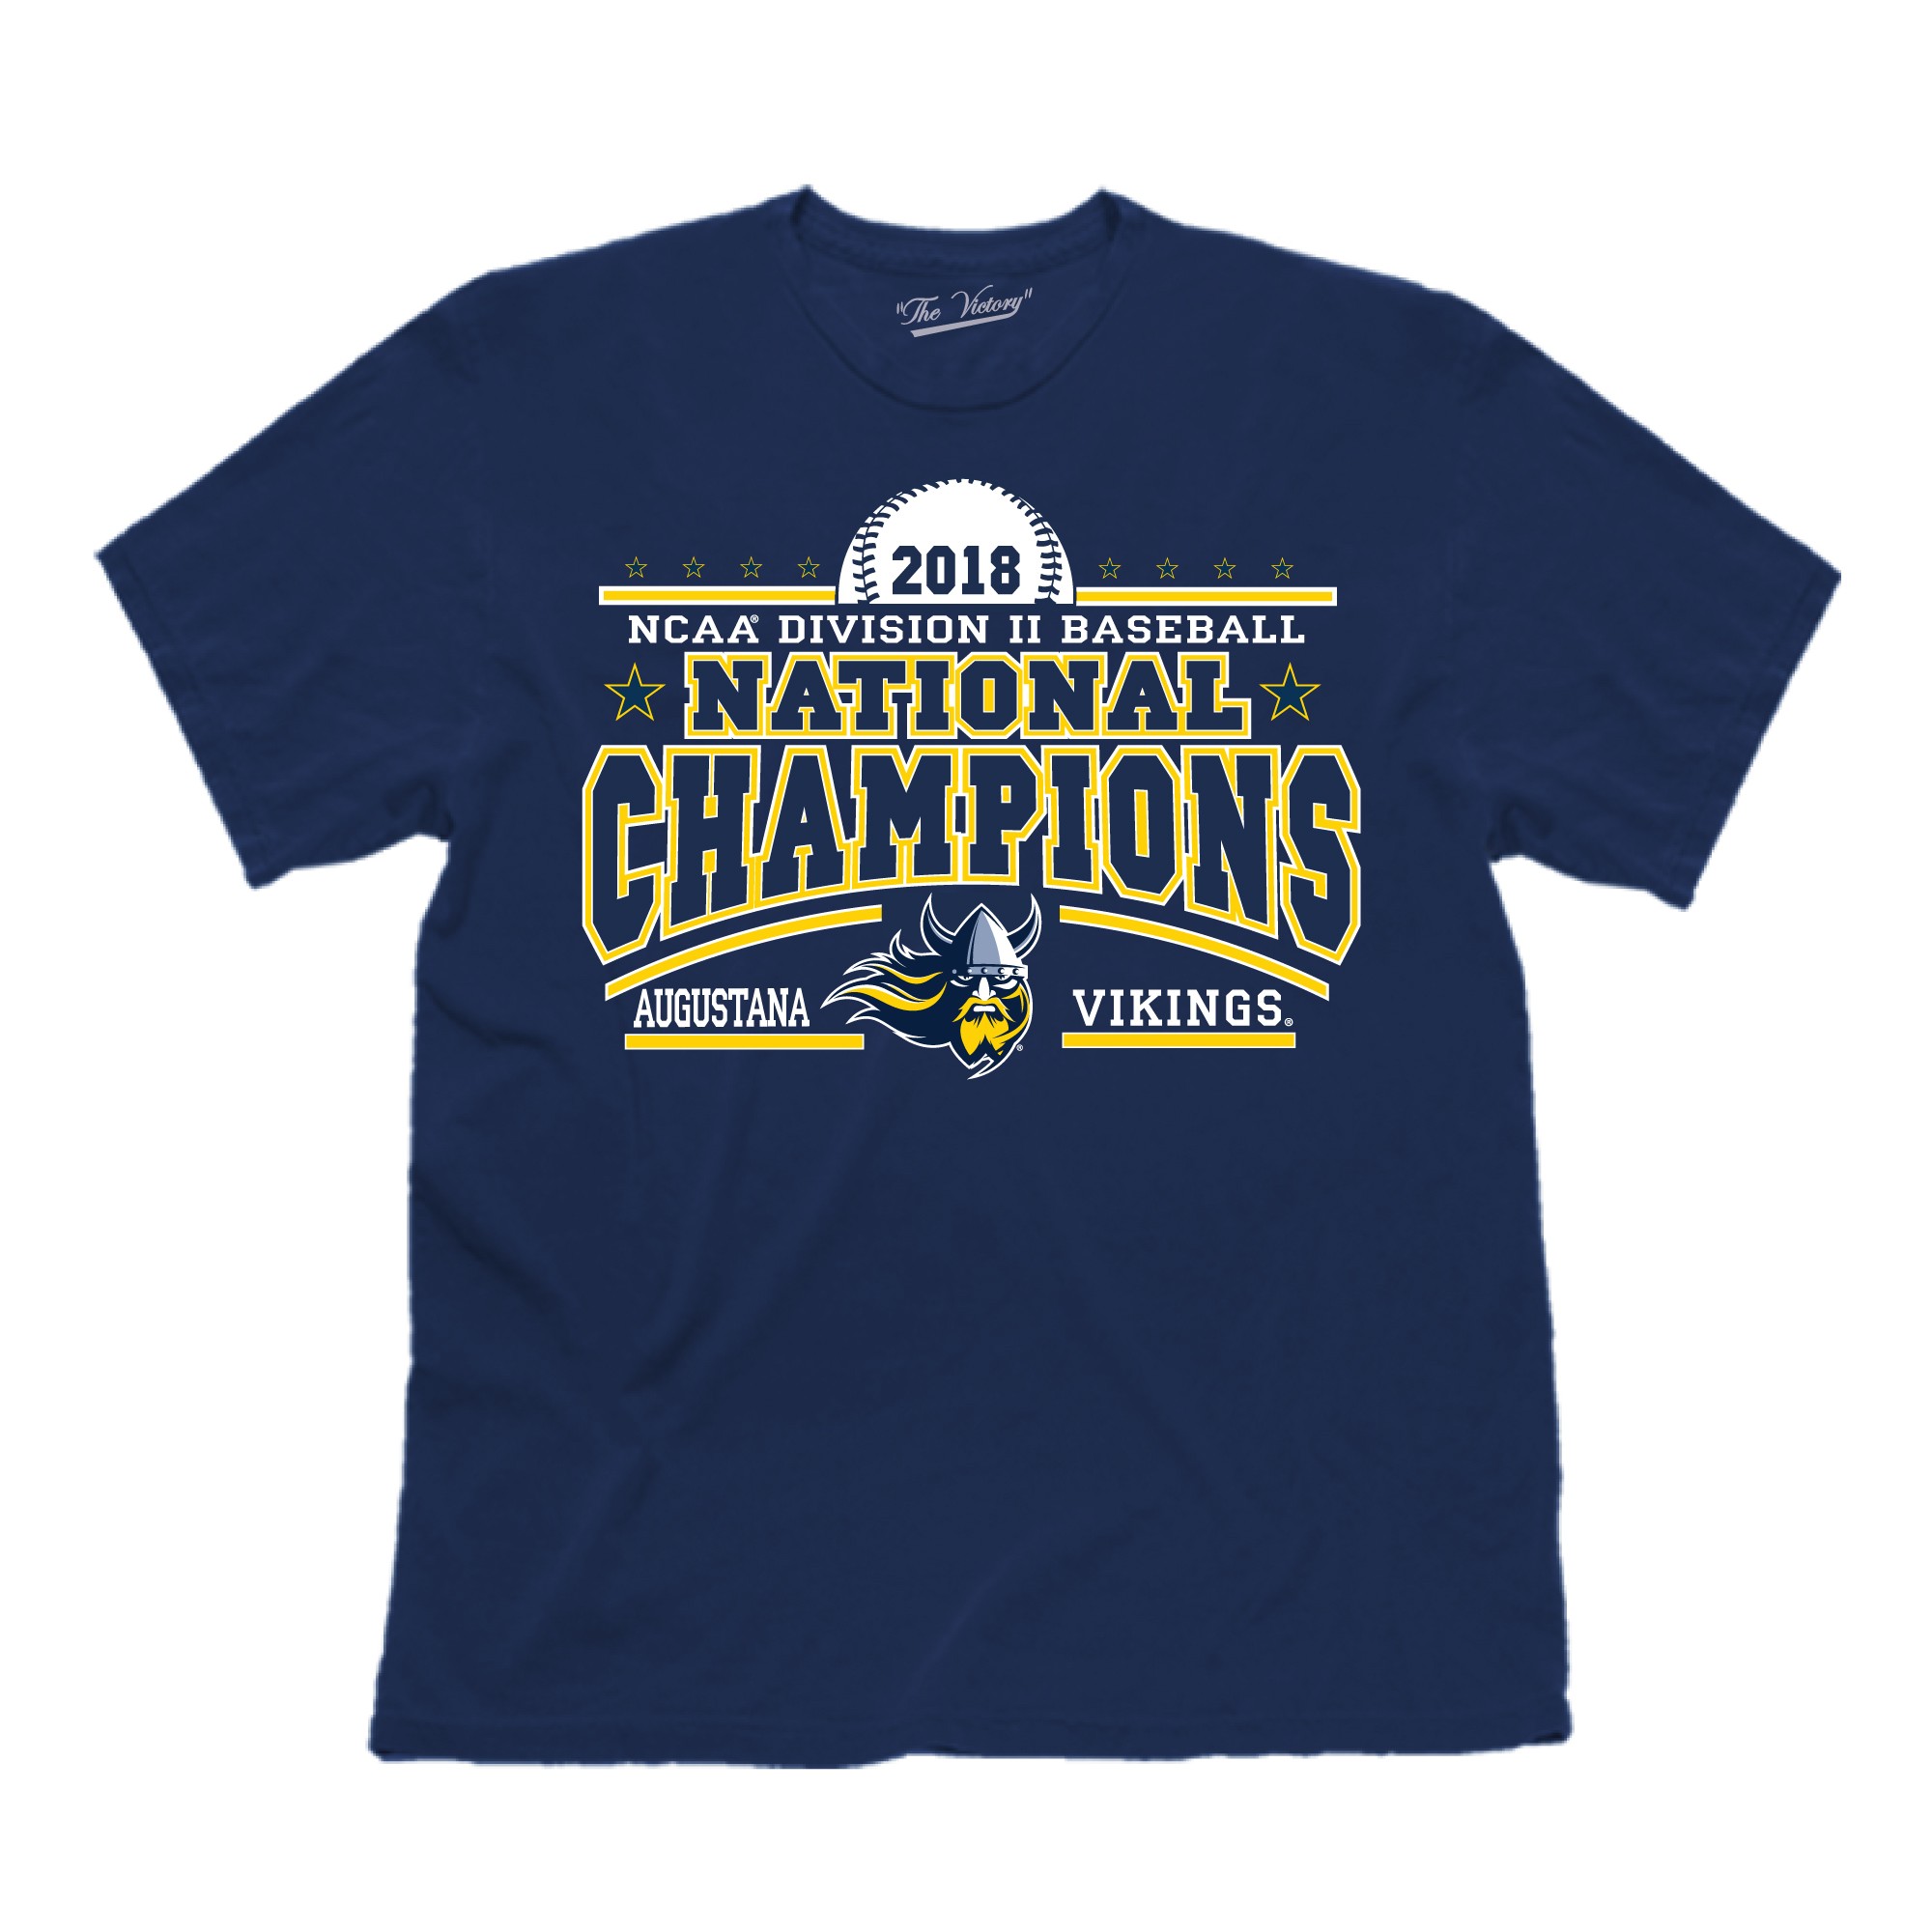 2018 national championship shirts